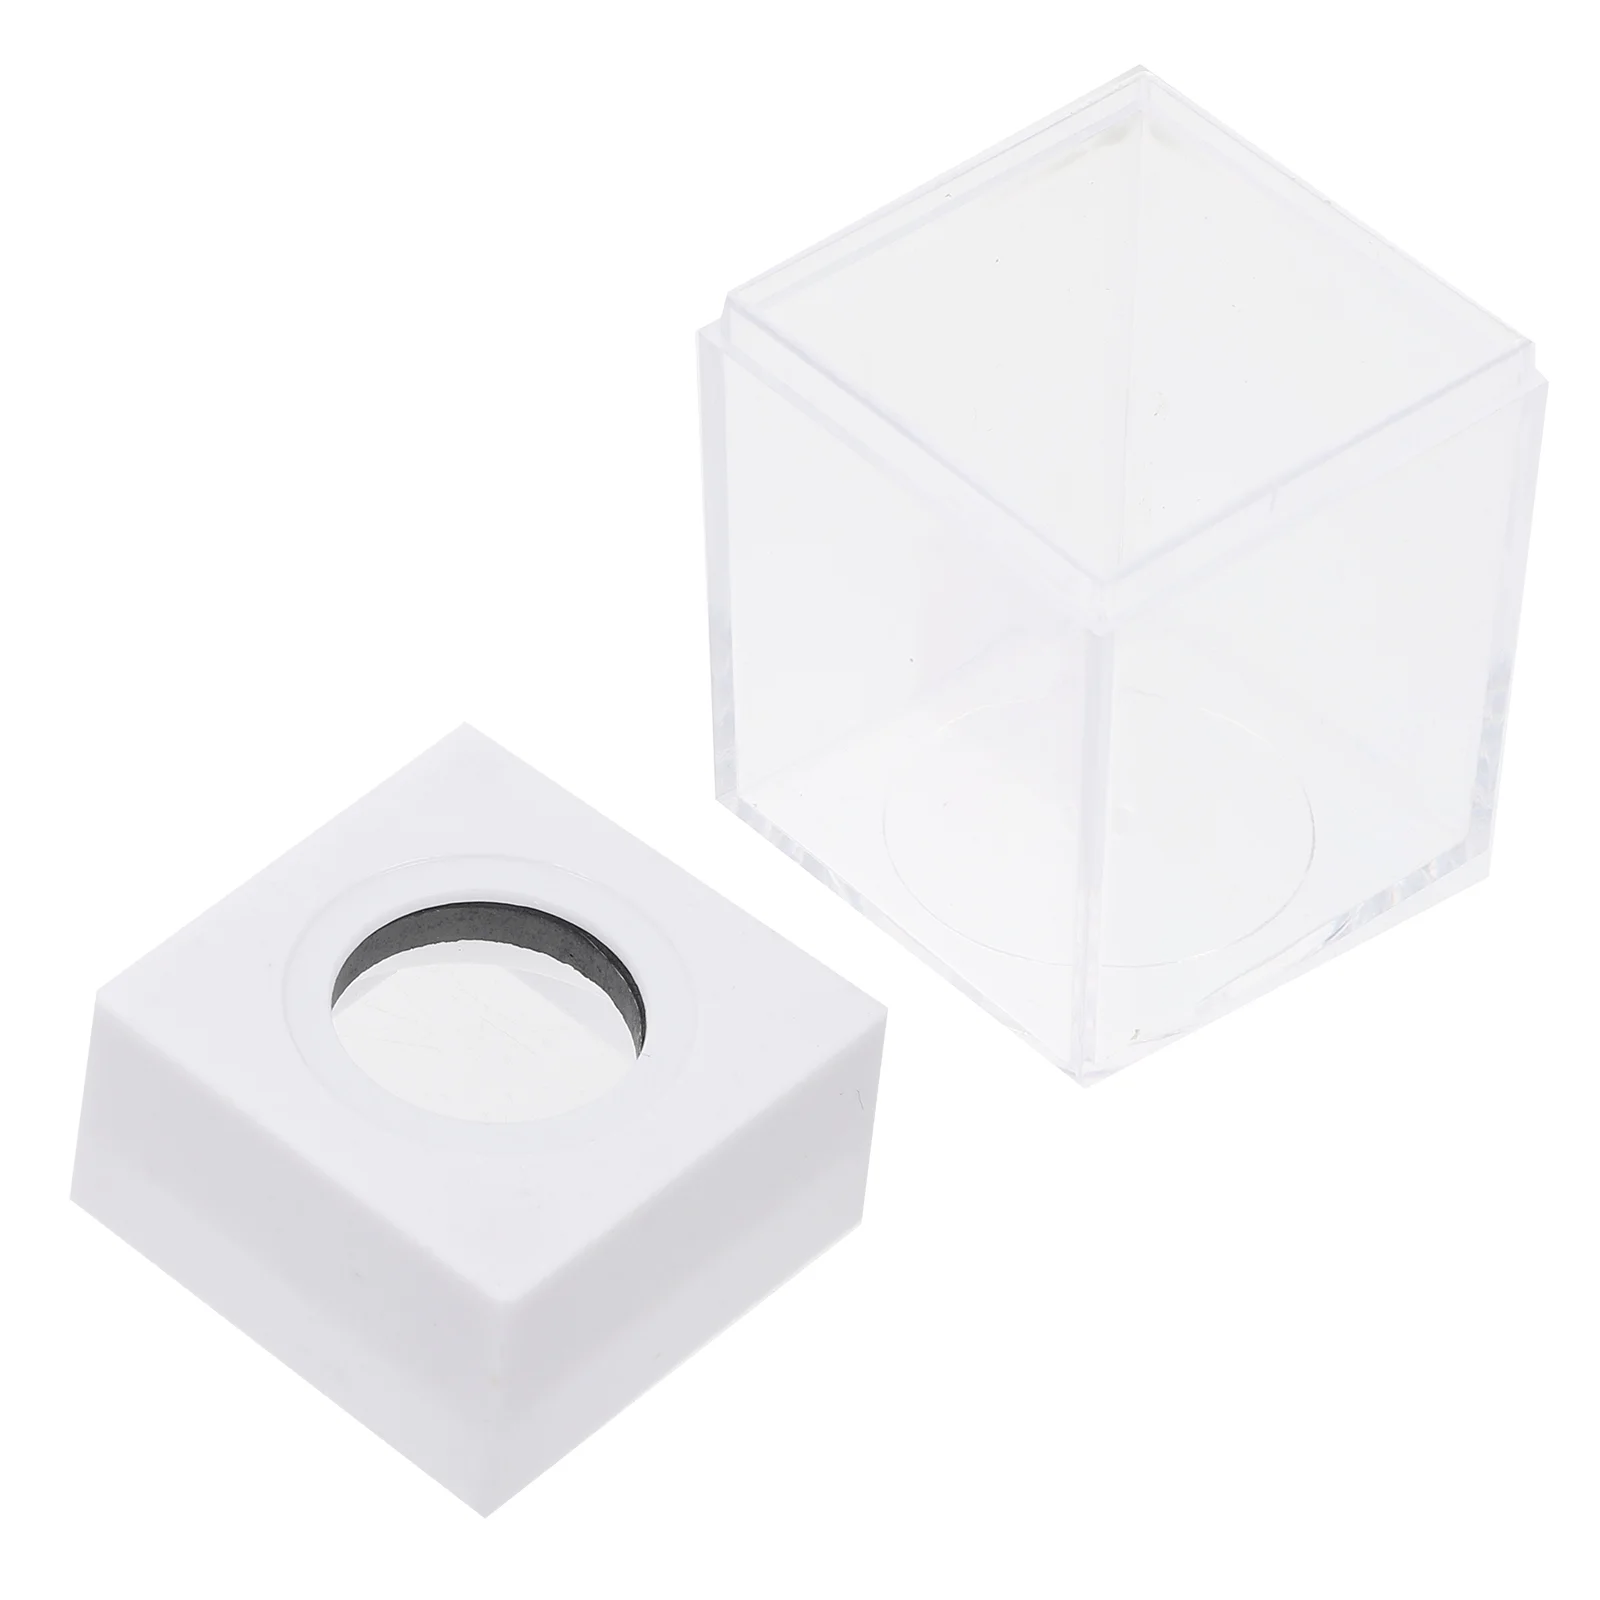 

2 Pcs Paper Clip Storage Bucket Student Stationery Square Desk Binder Holders Home Organizers Magnets Bracket Dispensers